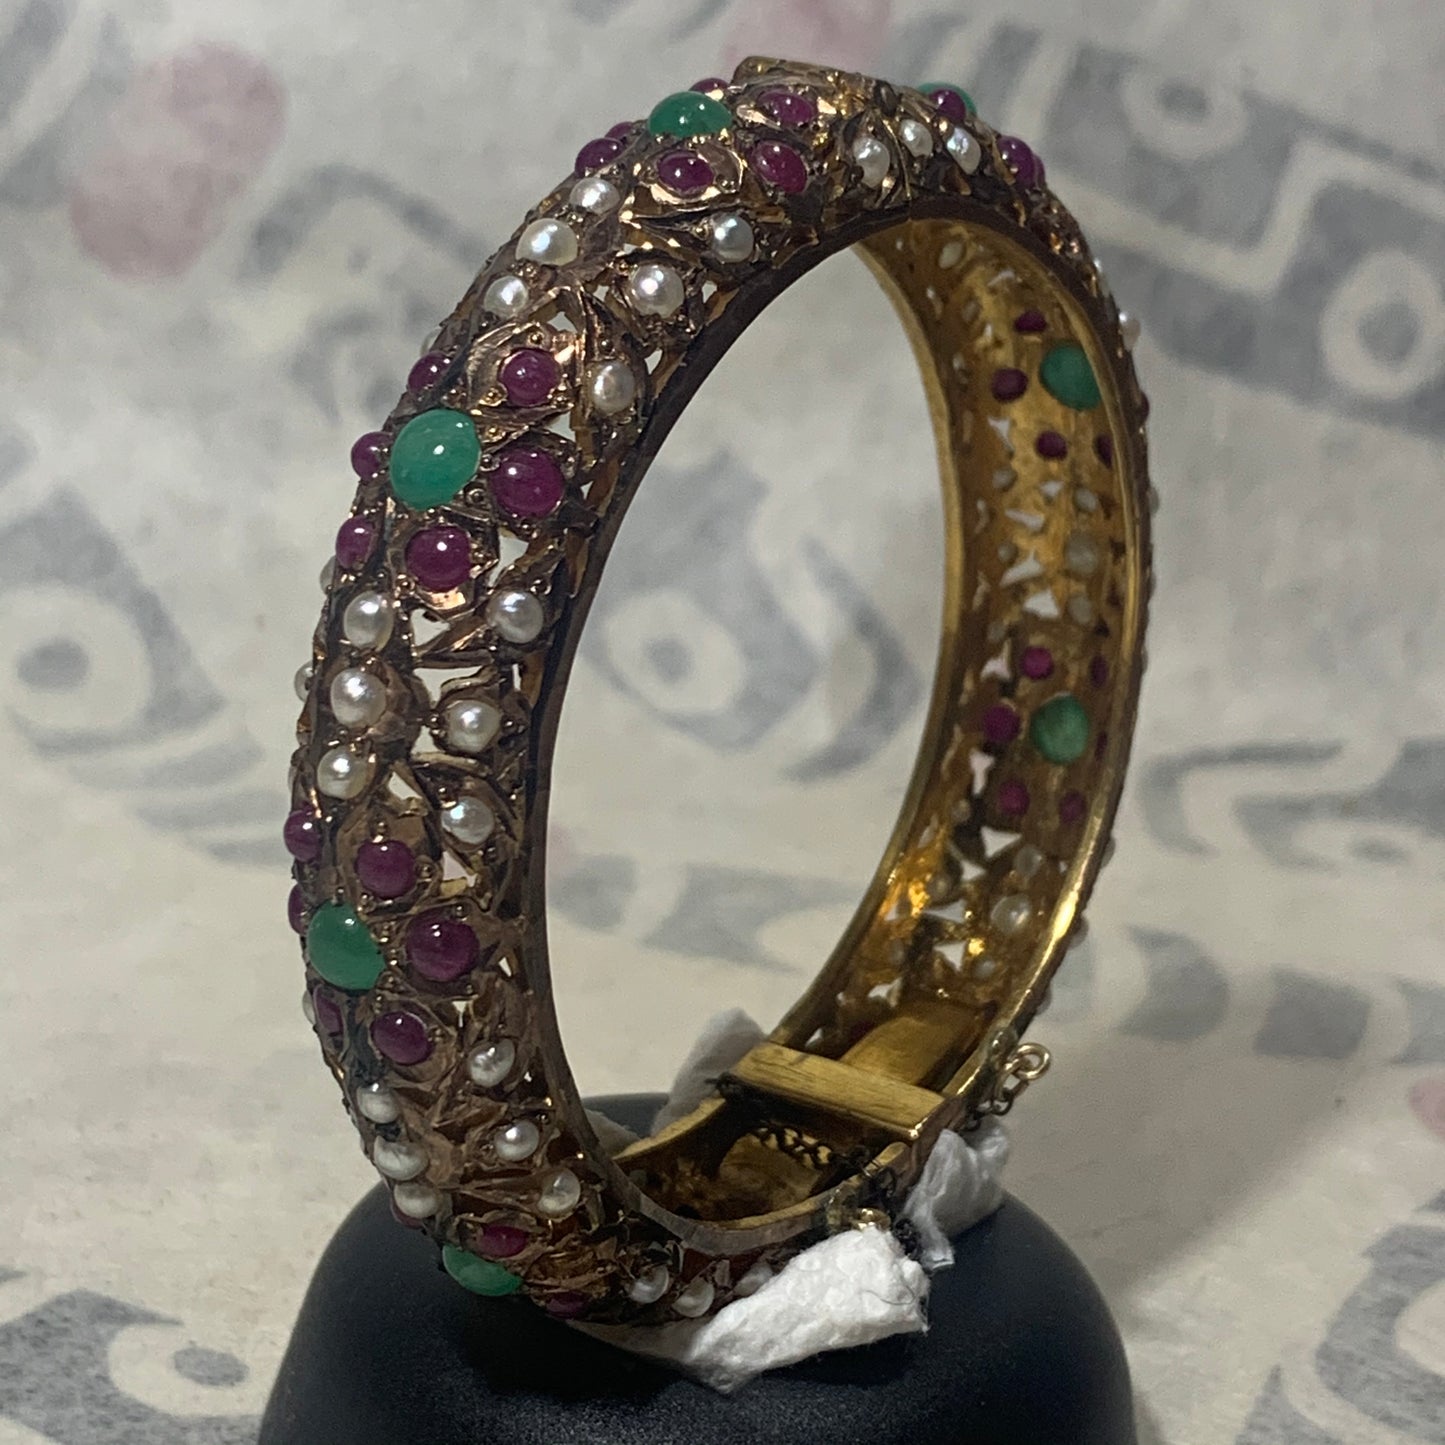 Antique Indian gold bangle